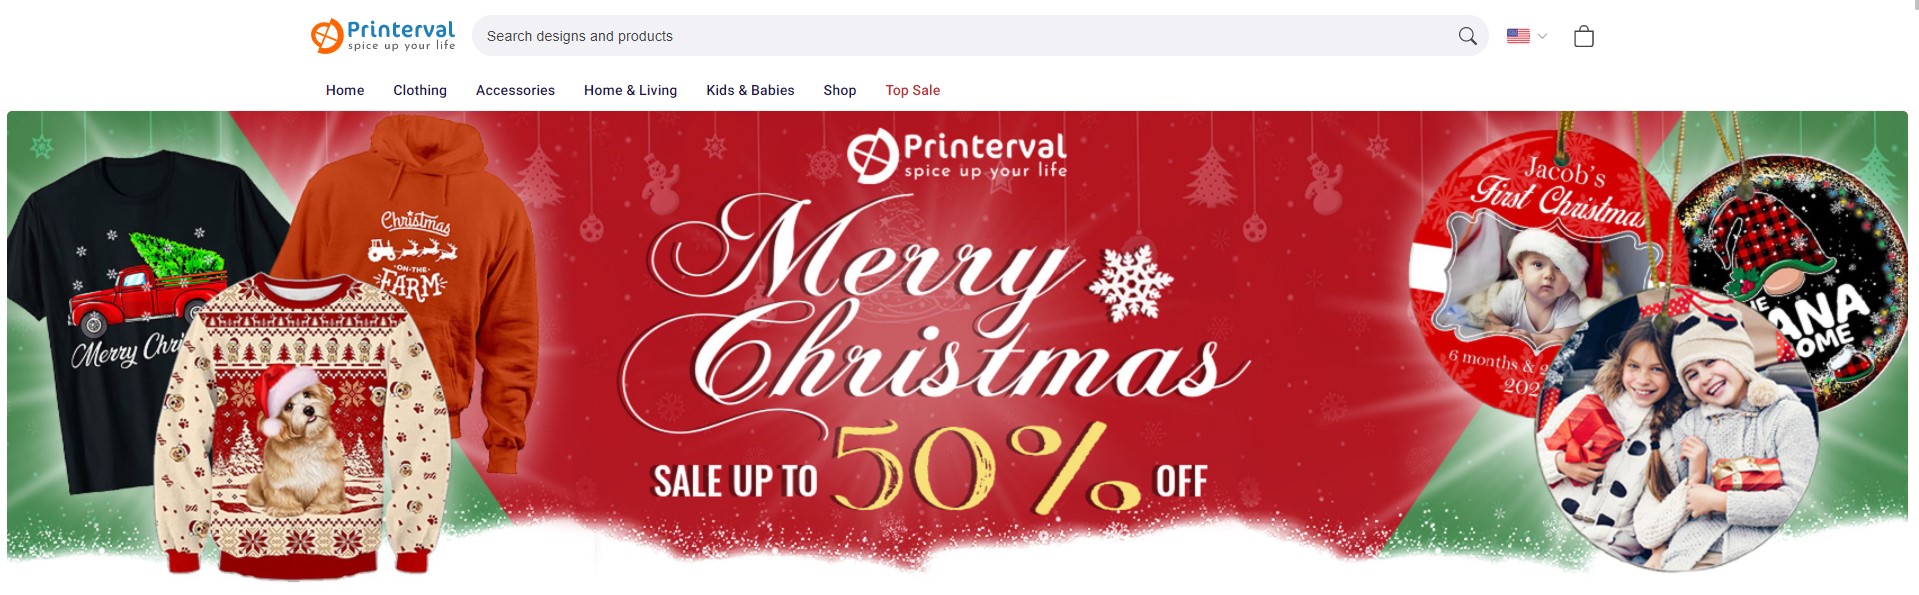 Printerval Homepage